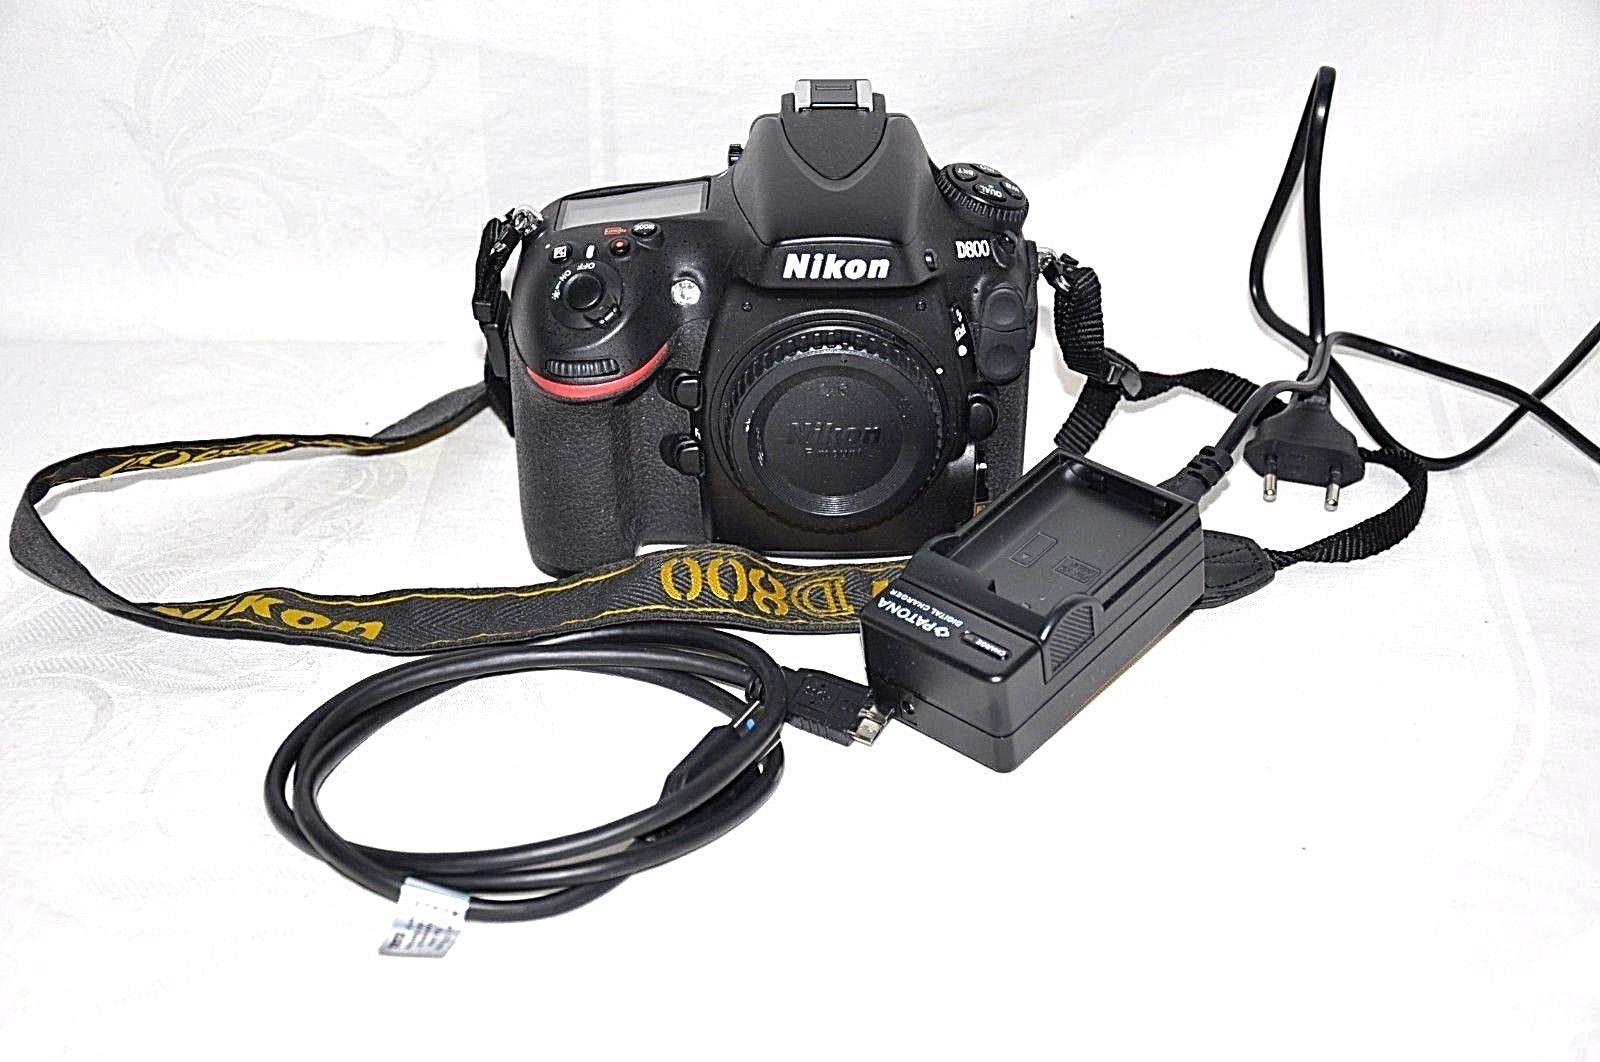 Nikon D D800 36.3 MP SLR-Digitalkamera - Schwarz (Nur Gehäuse) 12407 Auslösungen